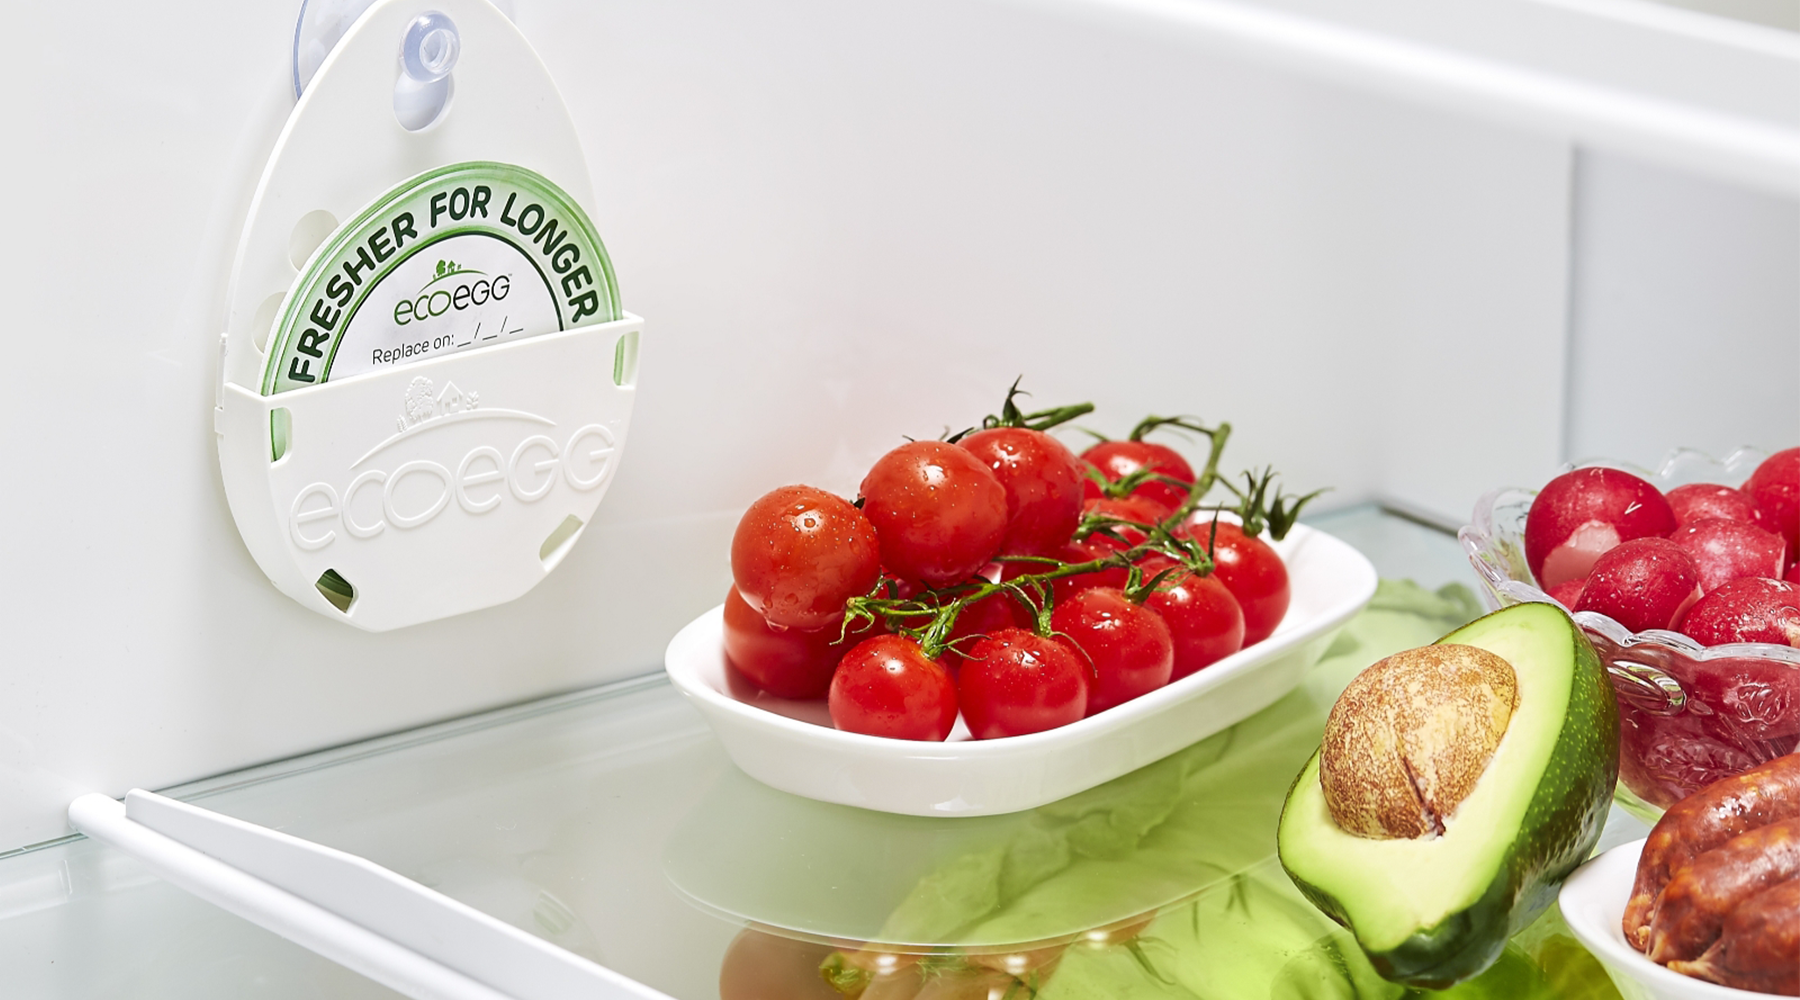 Ecoegg Fresher For Longer disc in a fridge filled with fruit and veg